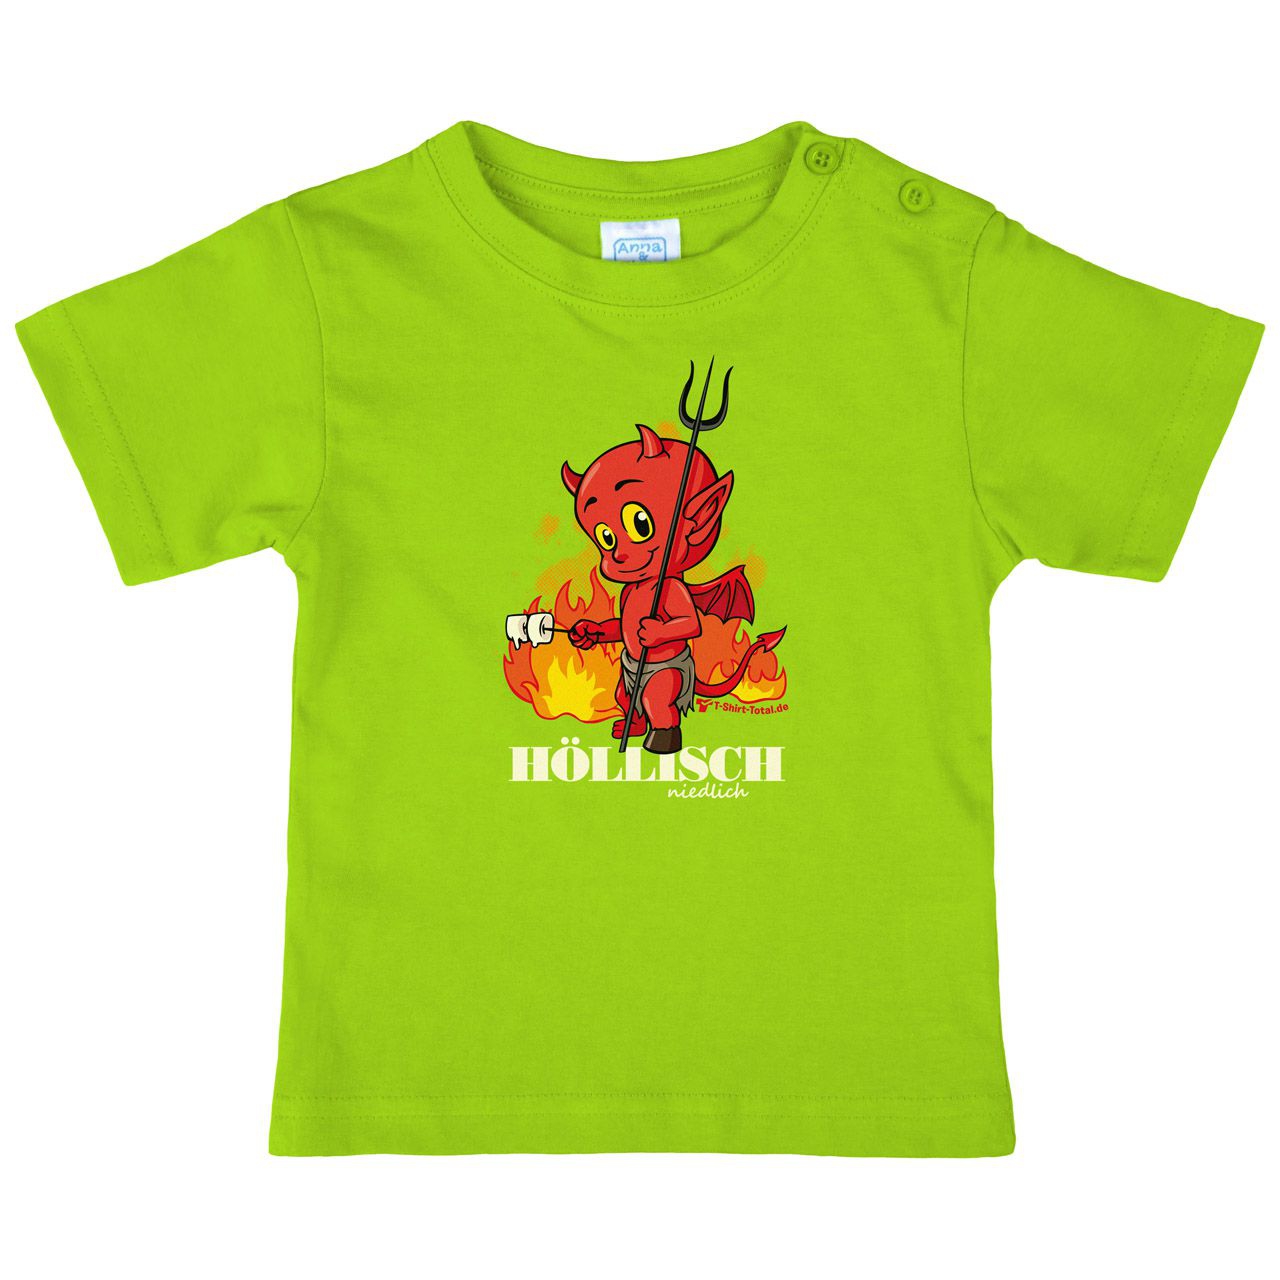 Höllisch niedlich Teufel Kinder T-Shirt hellgrün 92